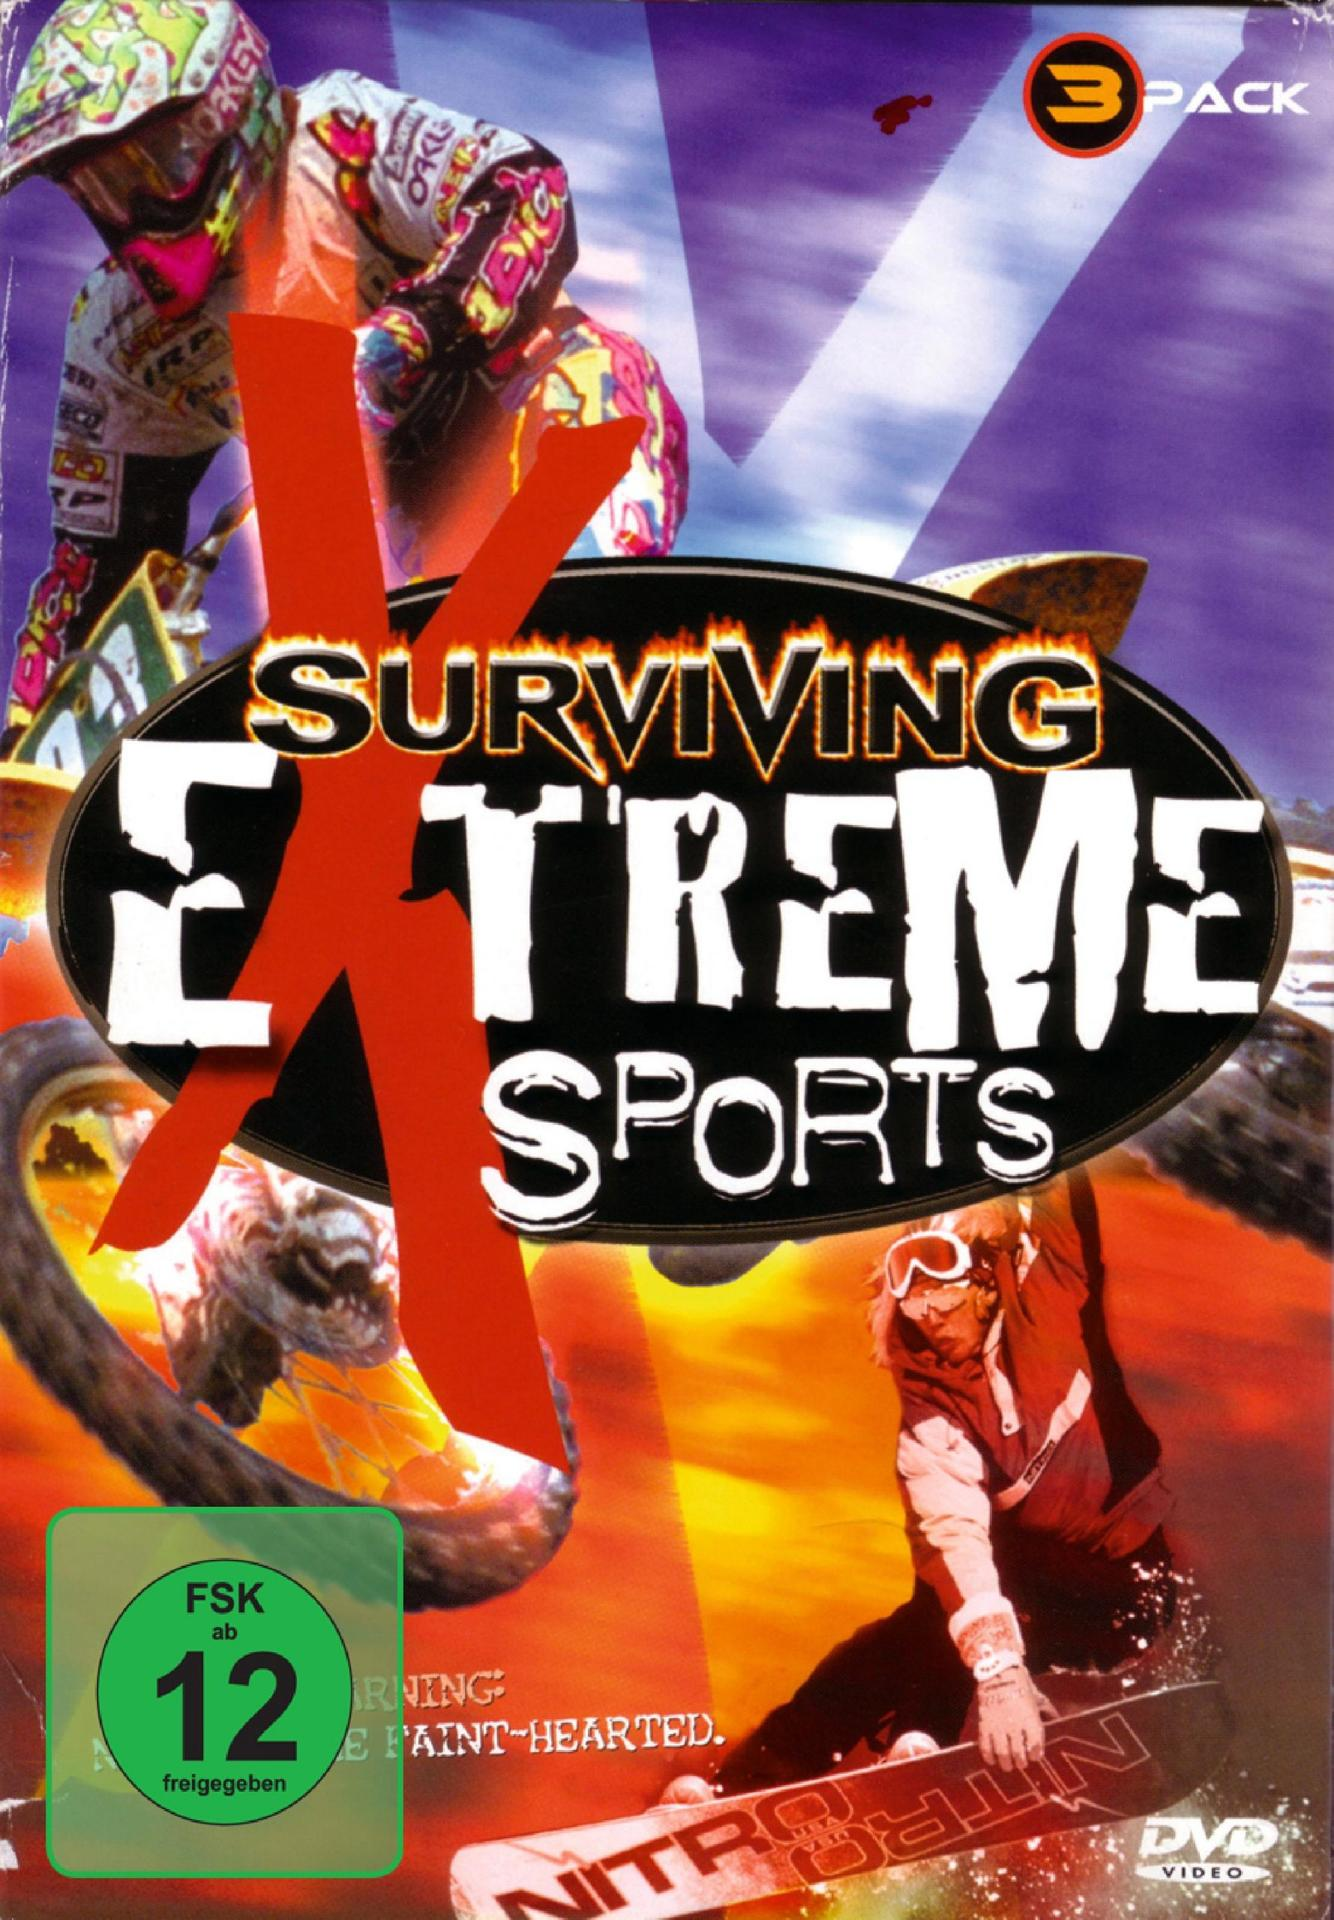 Surviving Extreme Sports DVD